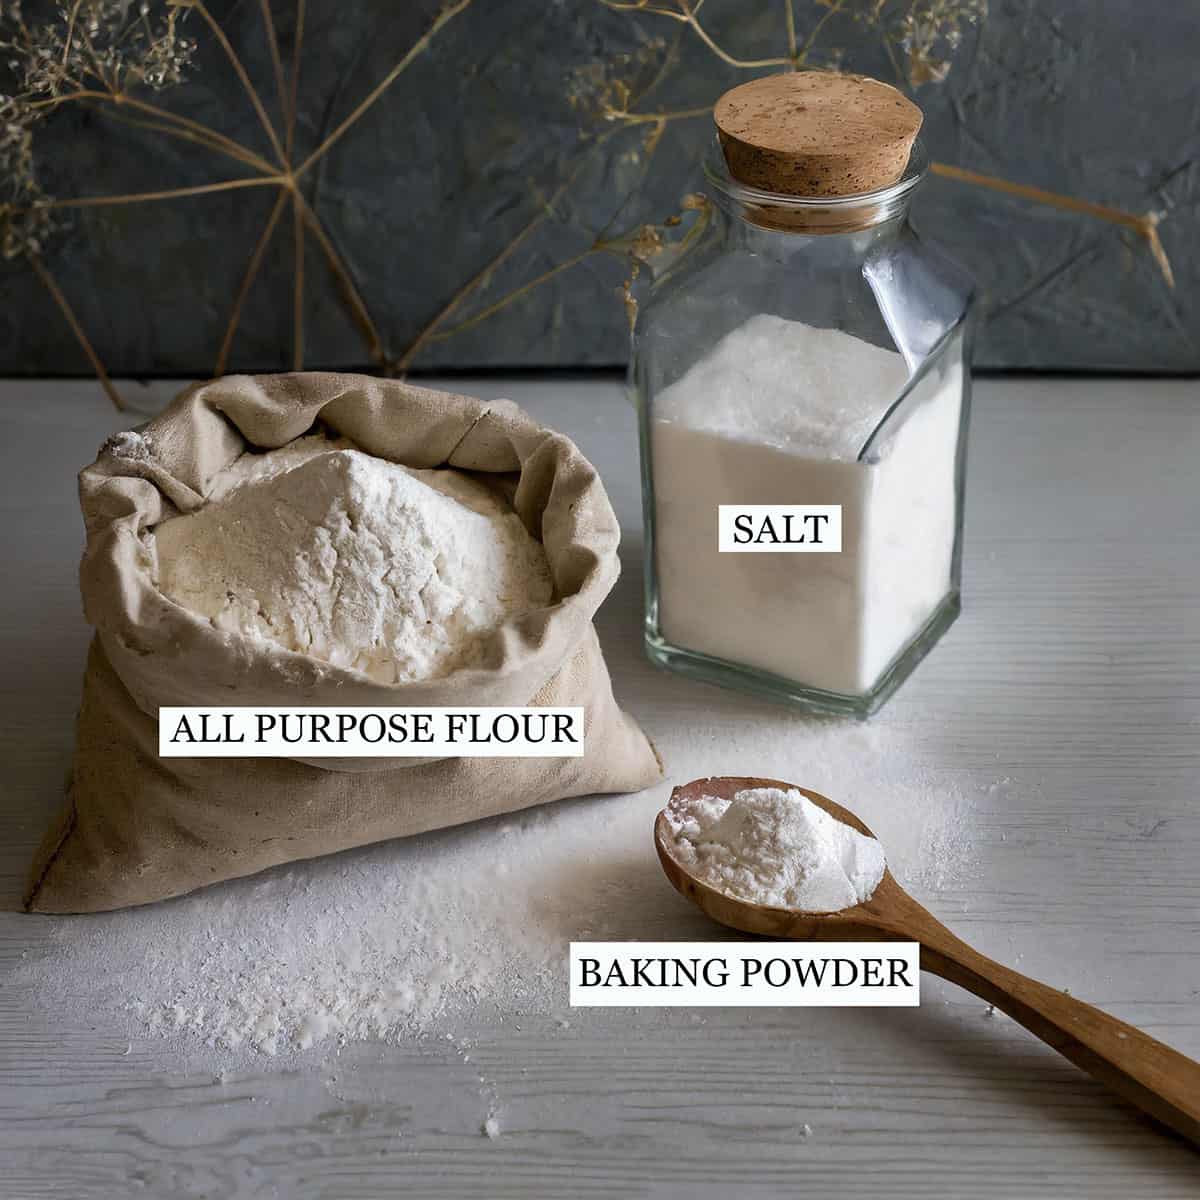 Ingredients needed to make self rising flour. All purpose flour, salt and baking powder.